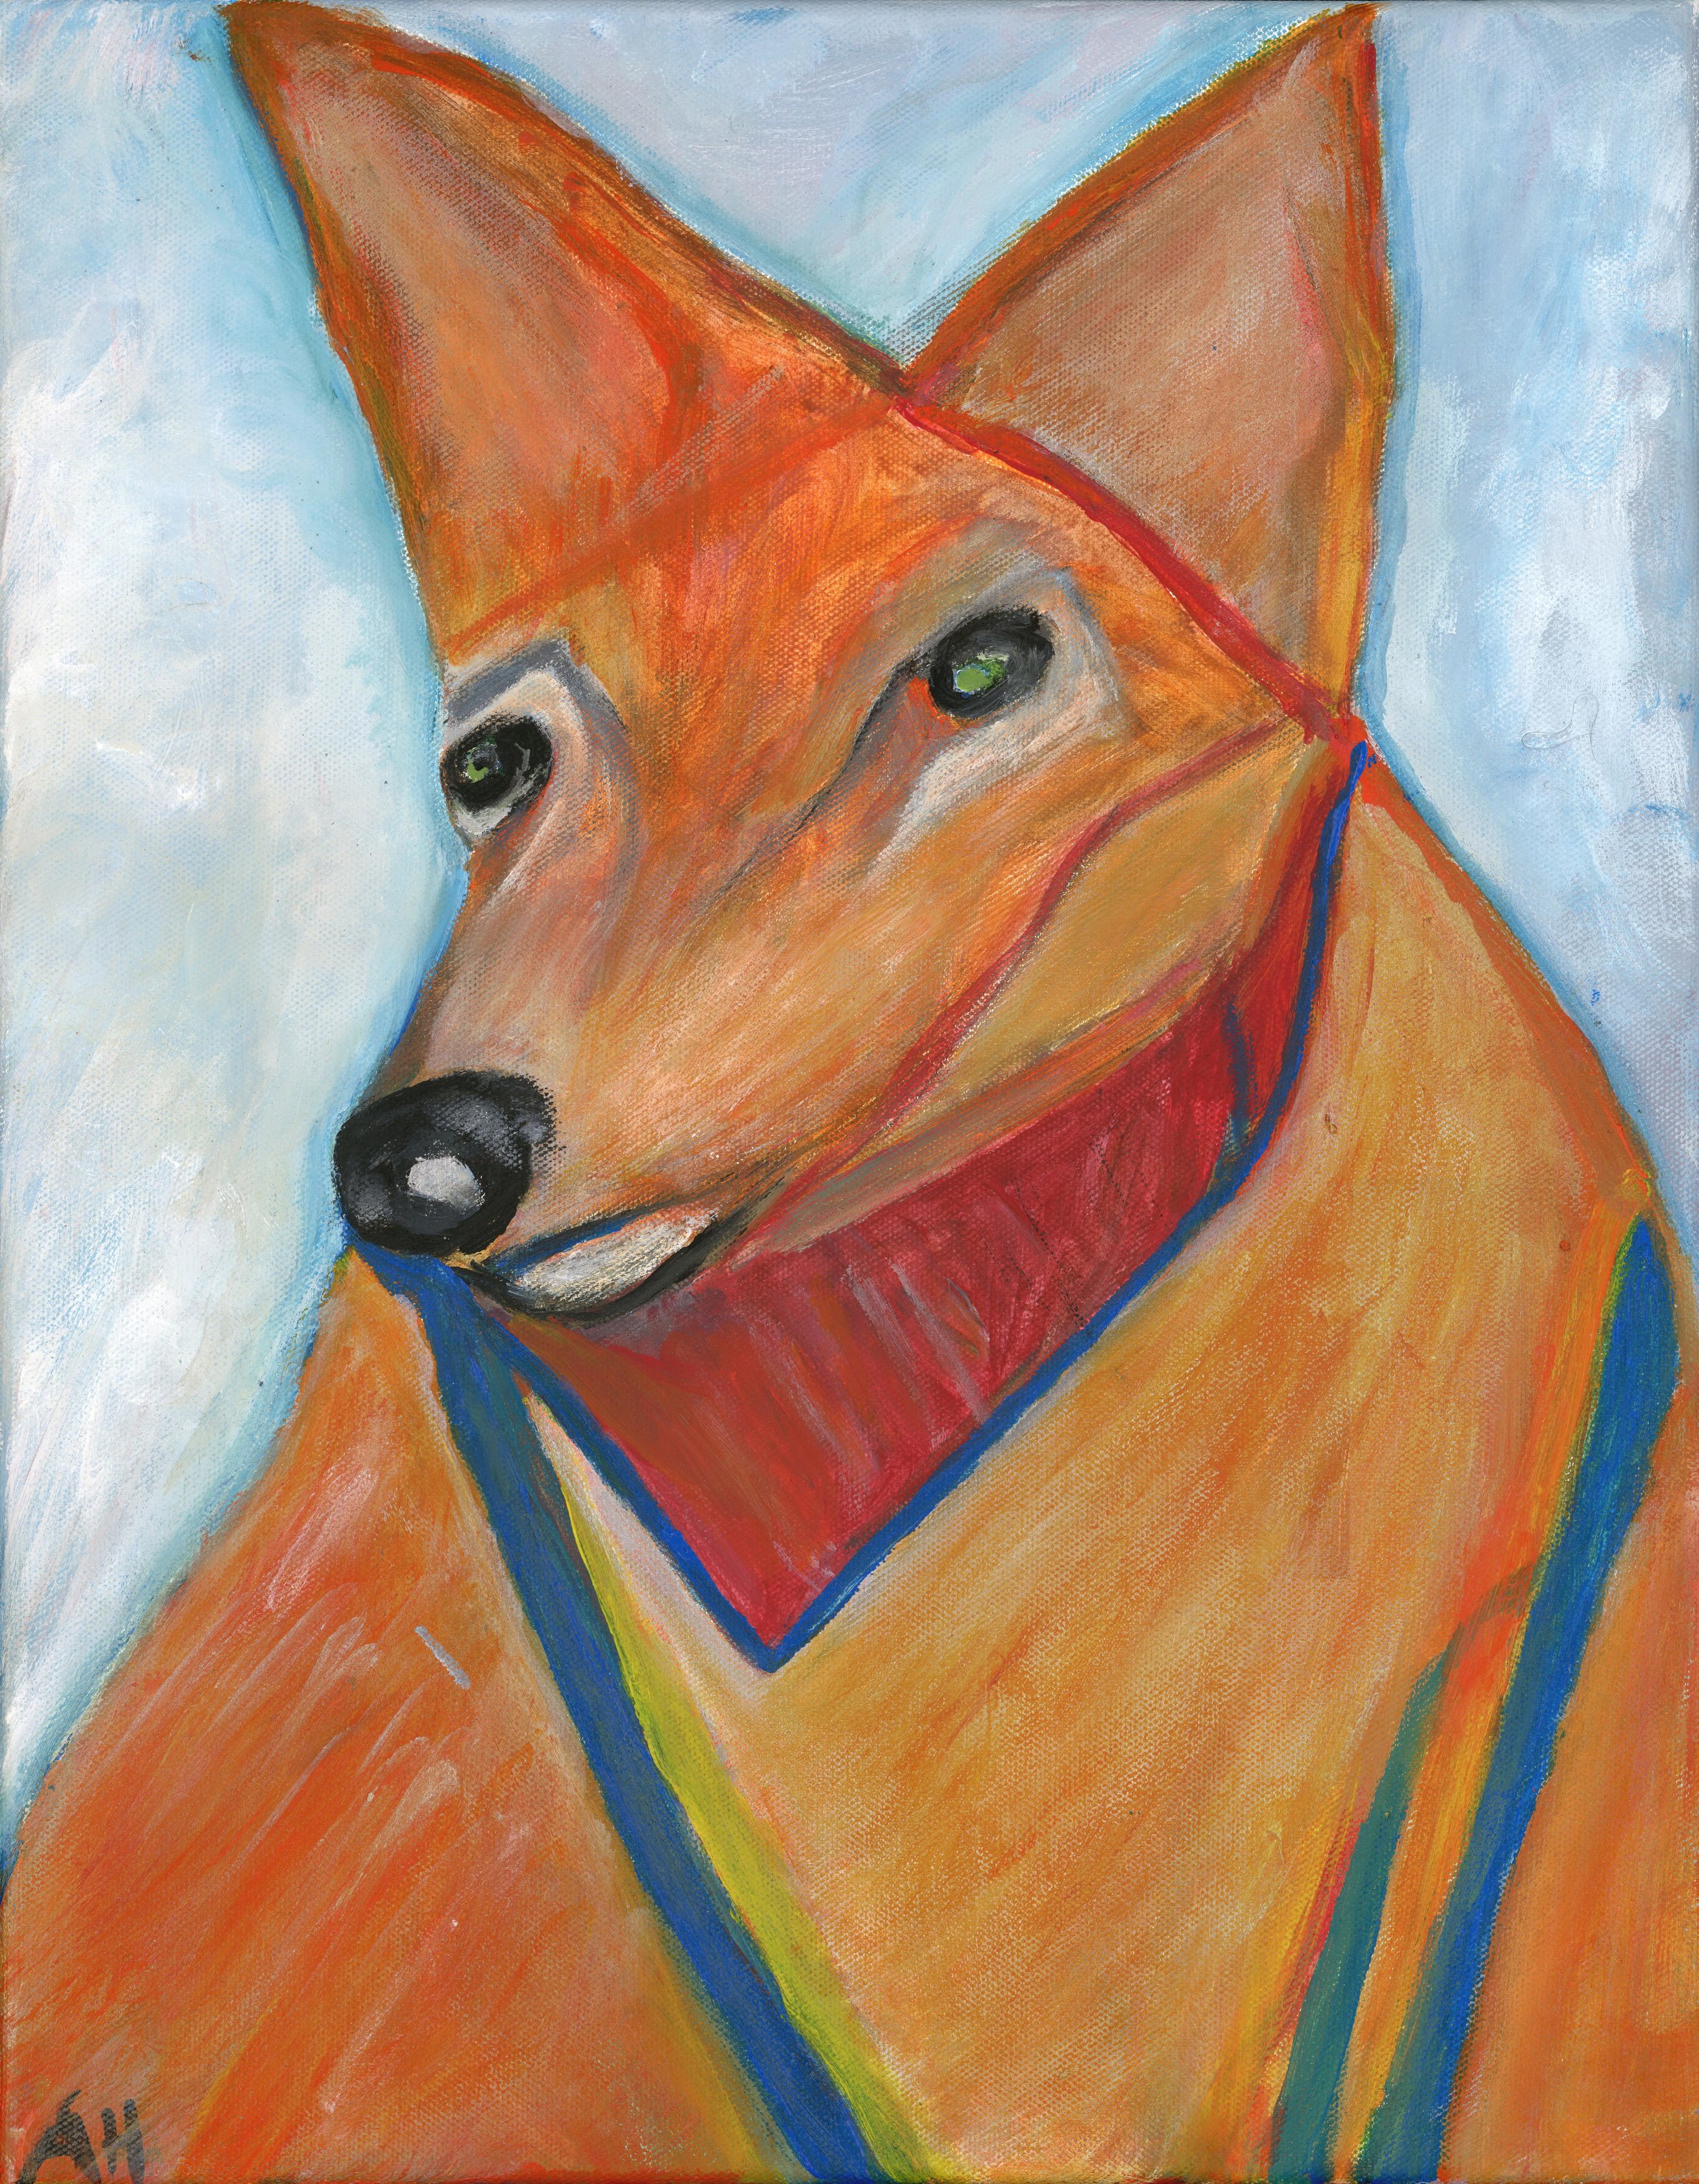 Farmer Fox